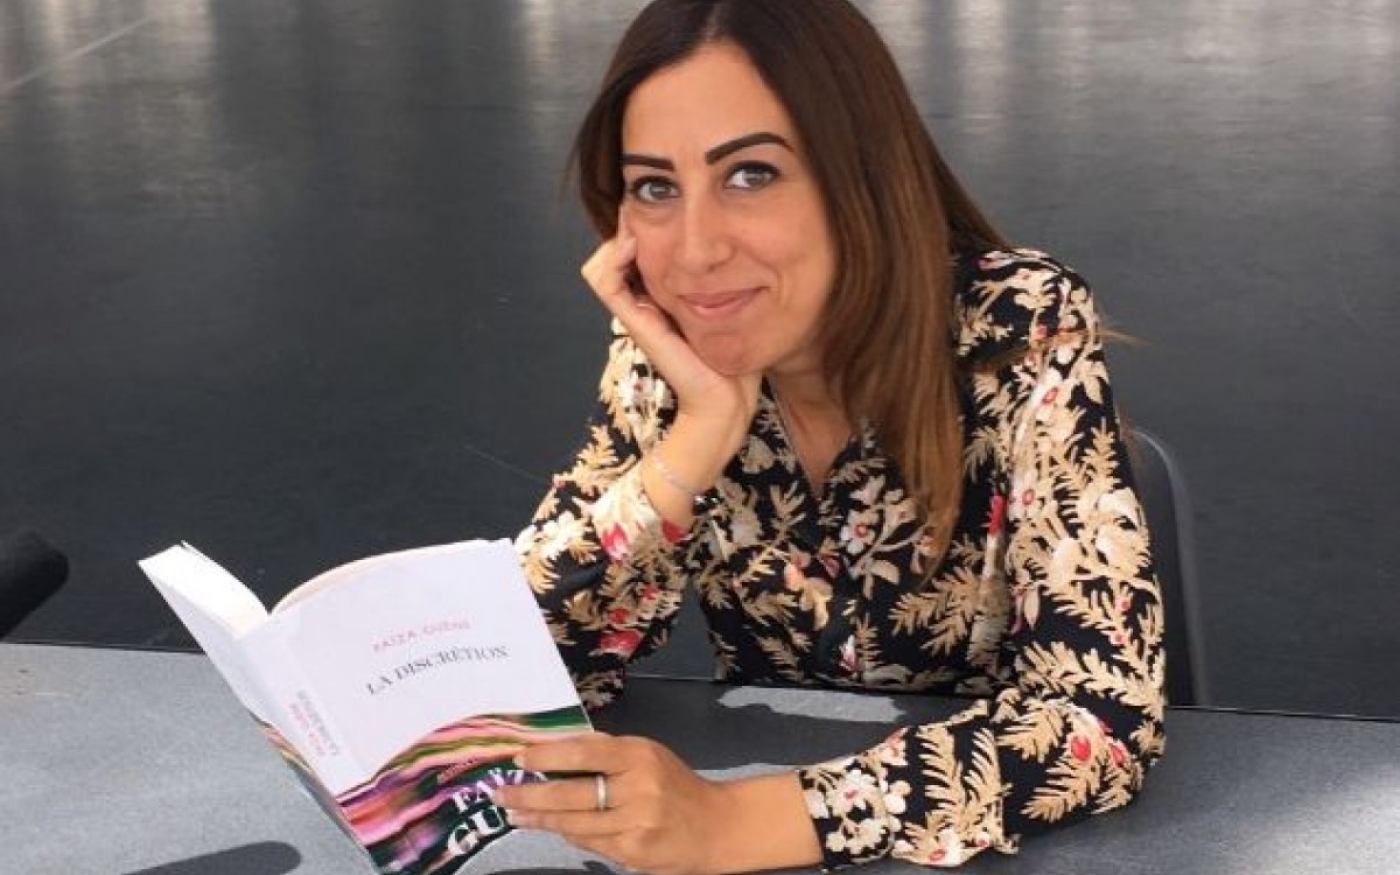 Le sixième roman de Faïza Guène, La discrétion, sort en août 2020 (Faïza Guène)